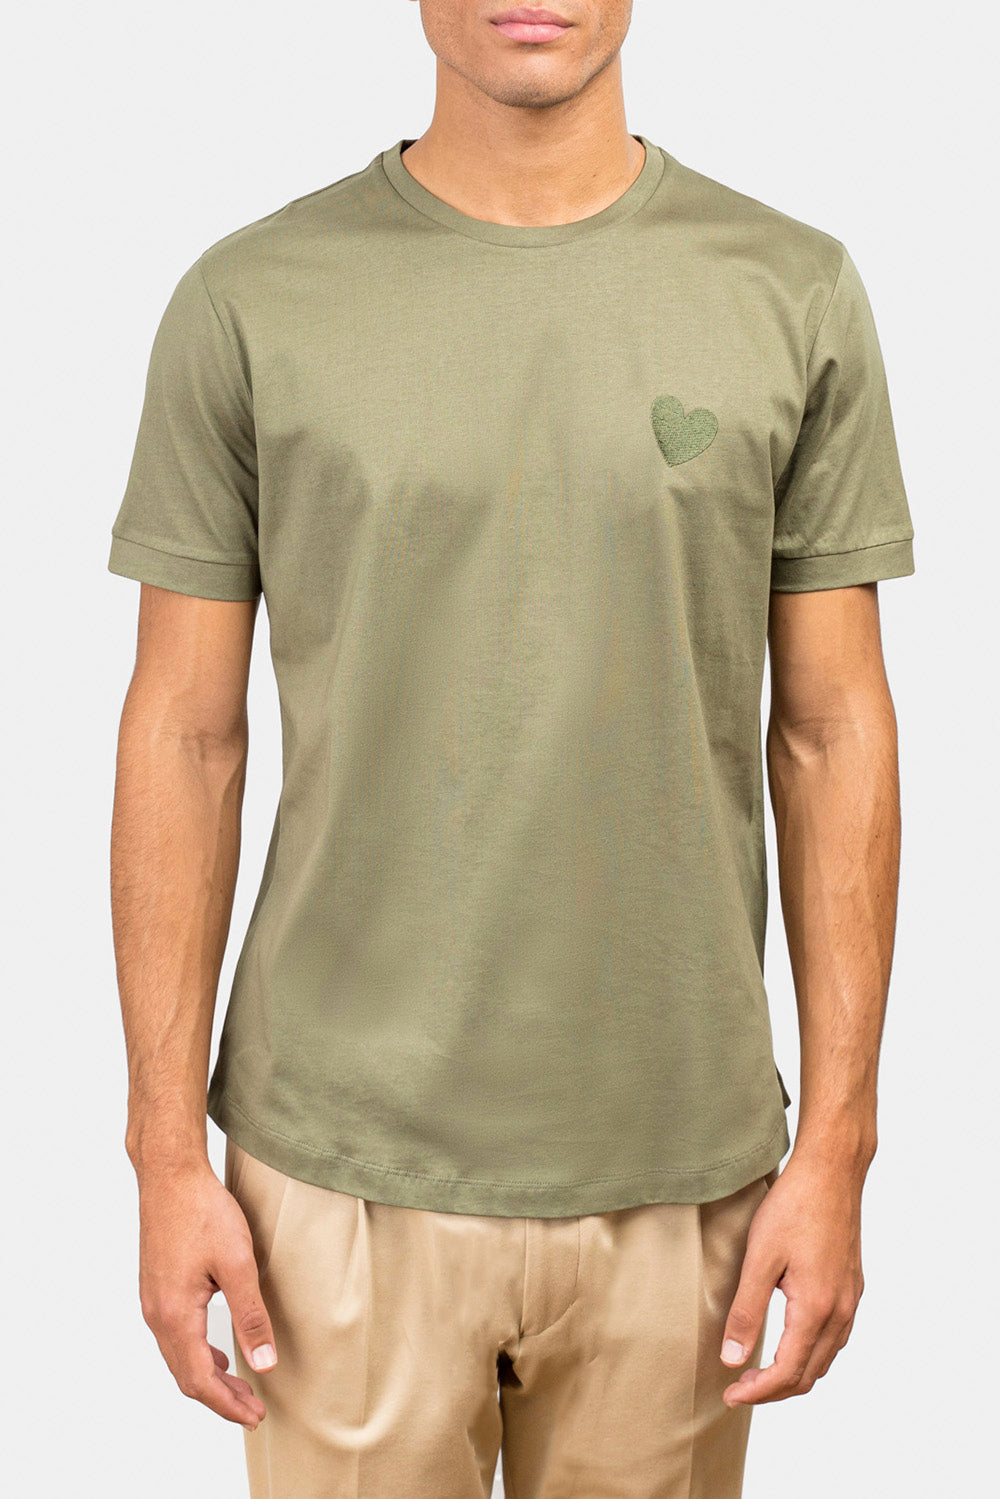 INIMIGO Classic Heart Green Regular Fit T-Shirt Menswear